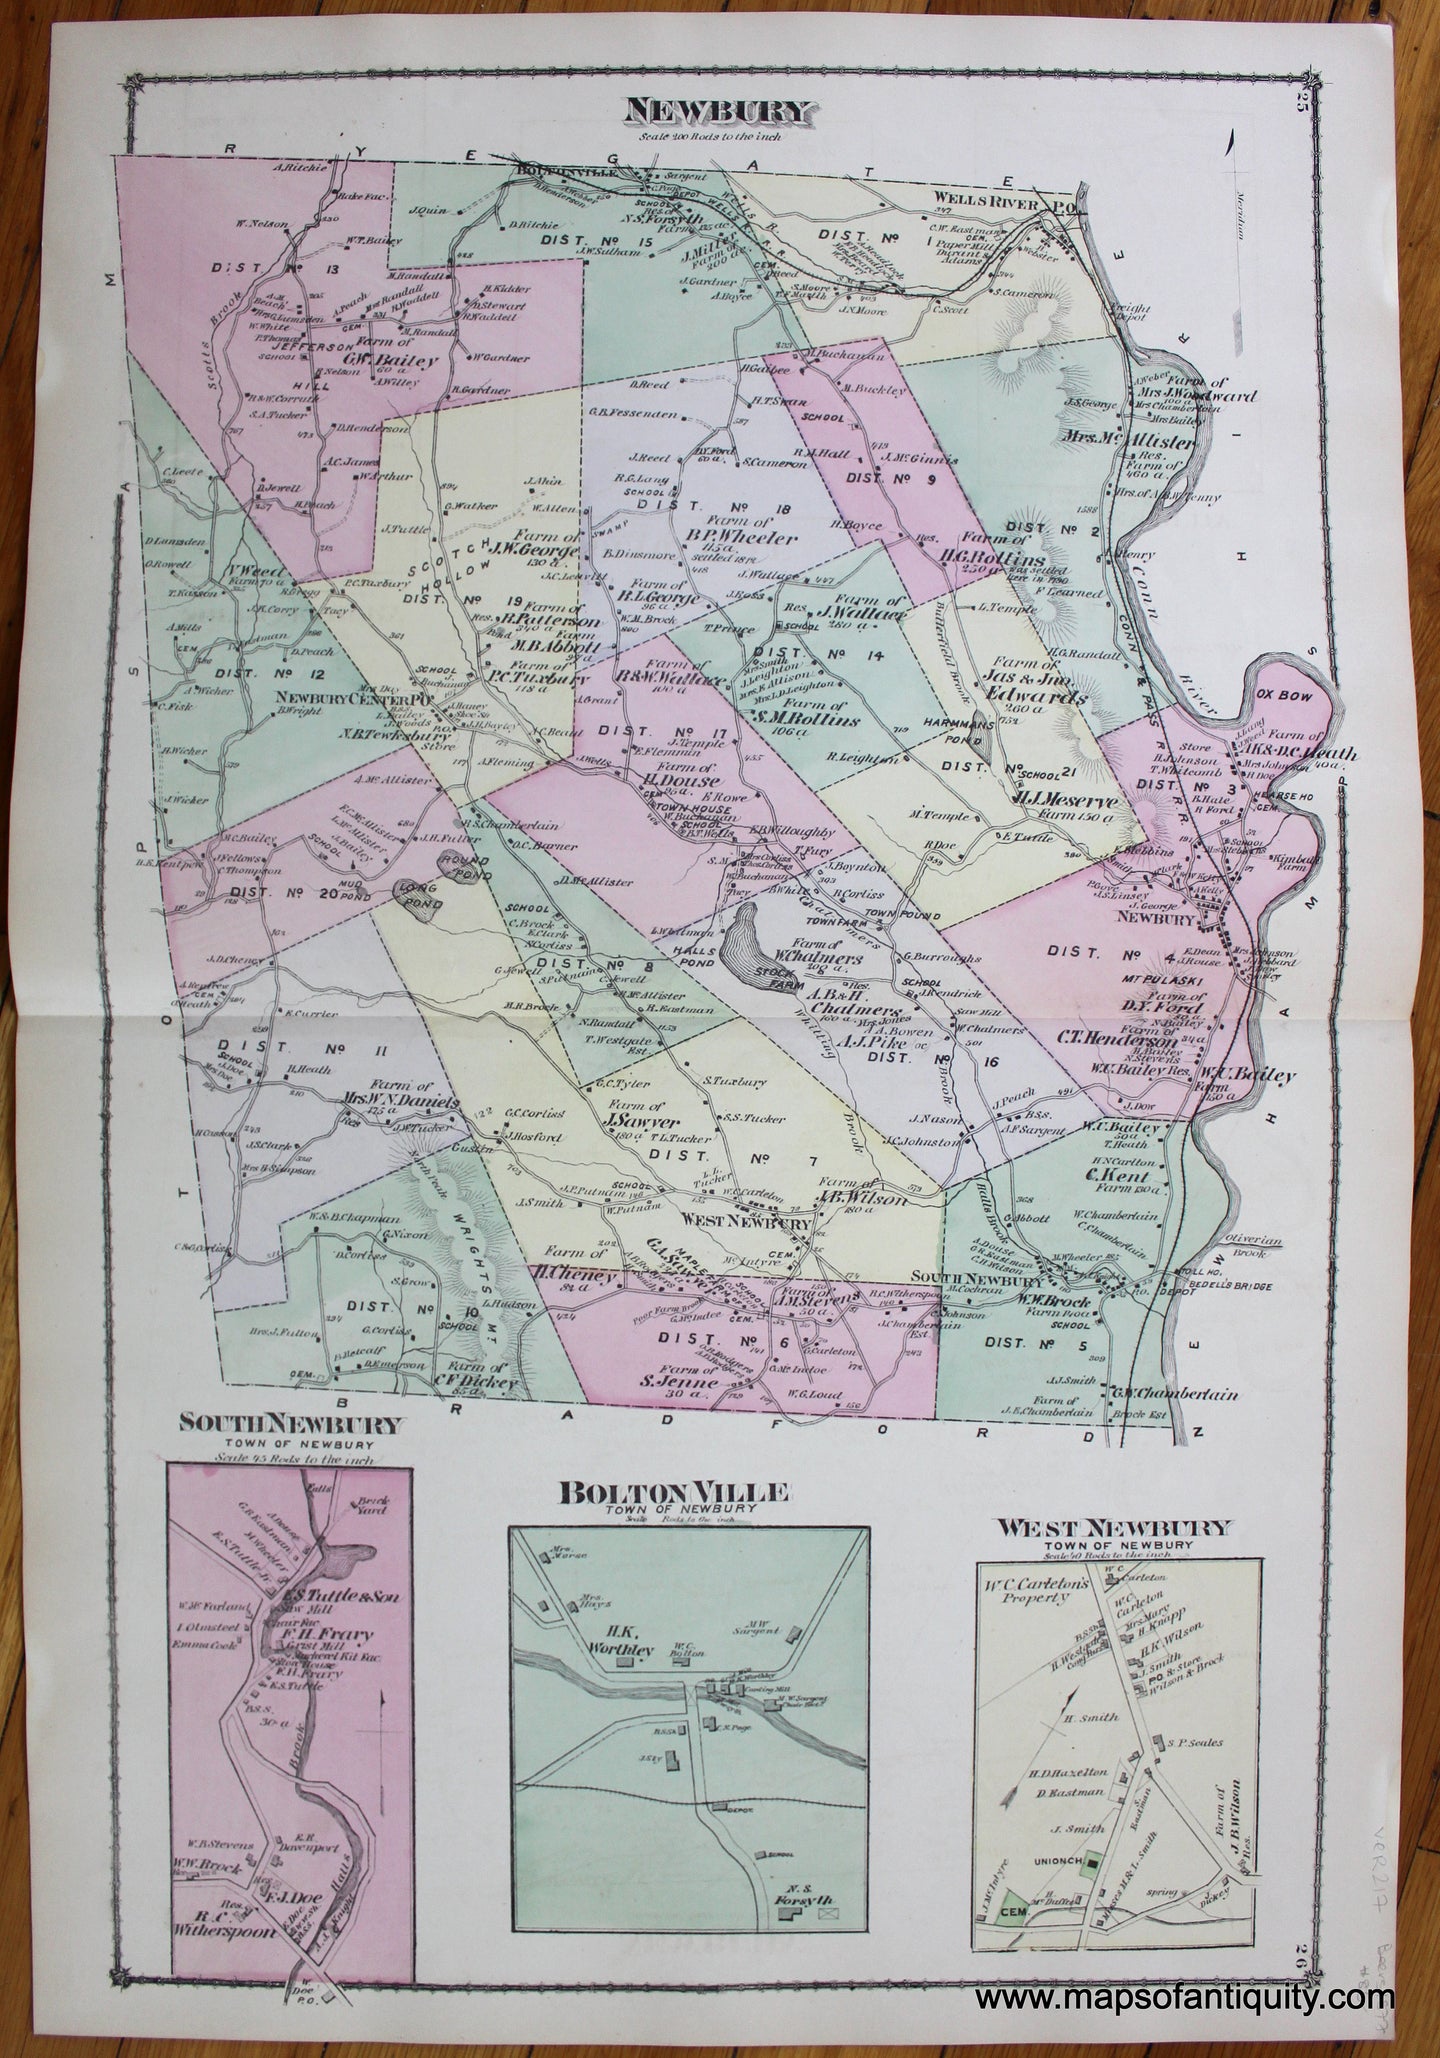 Newbury-South-Newbury-Bolton-Ville-West-Newbury-1877-Beers-Antique-Map-Vermont-Orange-County-1870s-1800s-19th-century-Maps-of-Antiquity